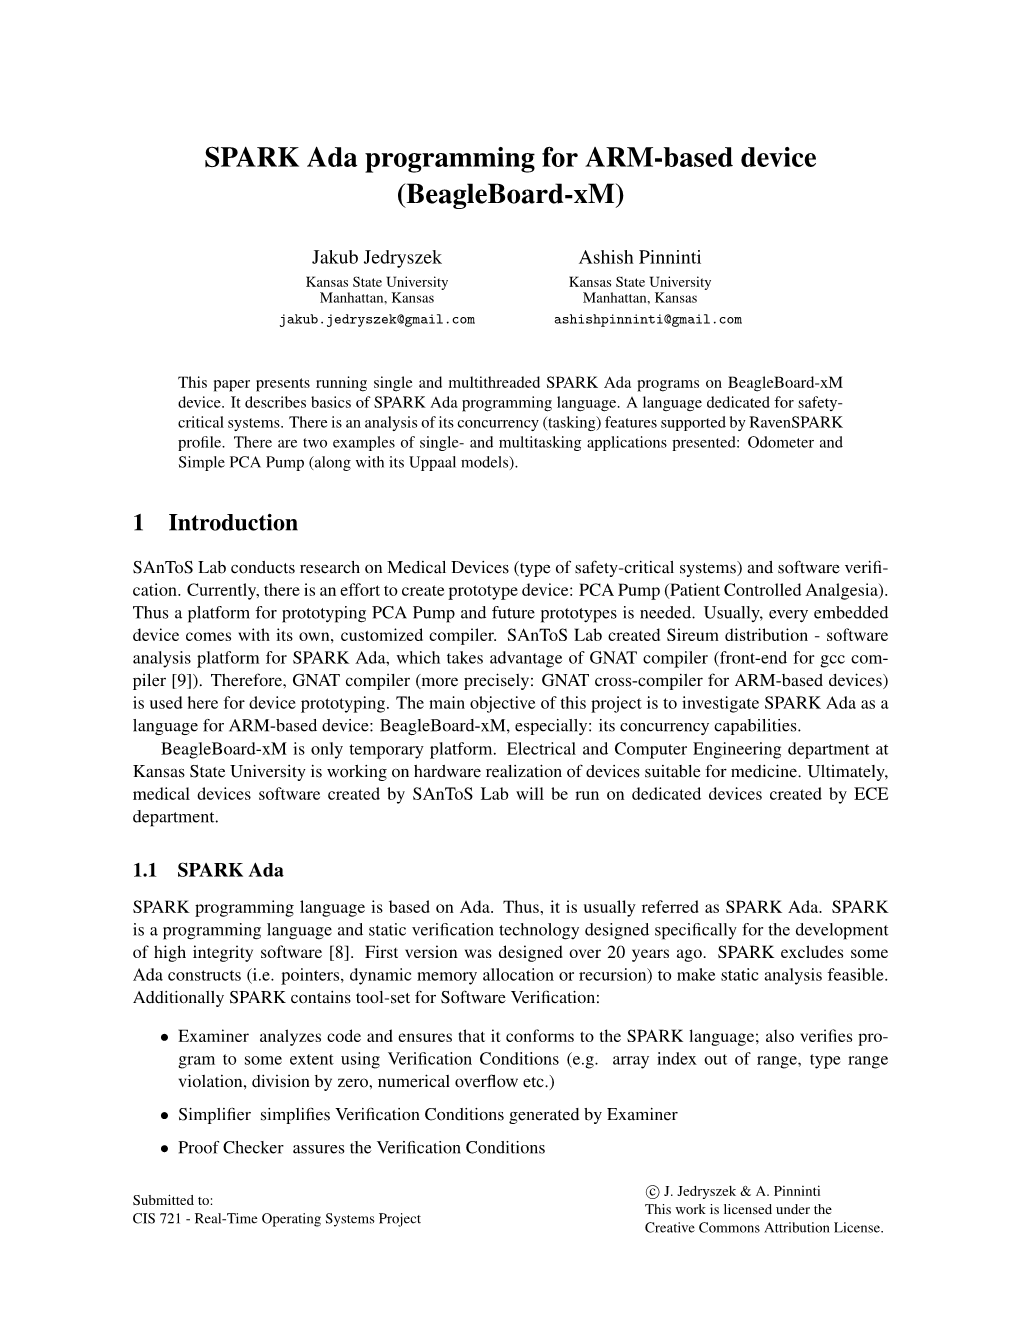 SPARK Ada Programming for ARM-Based Device (Beagleboard-Xm)